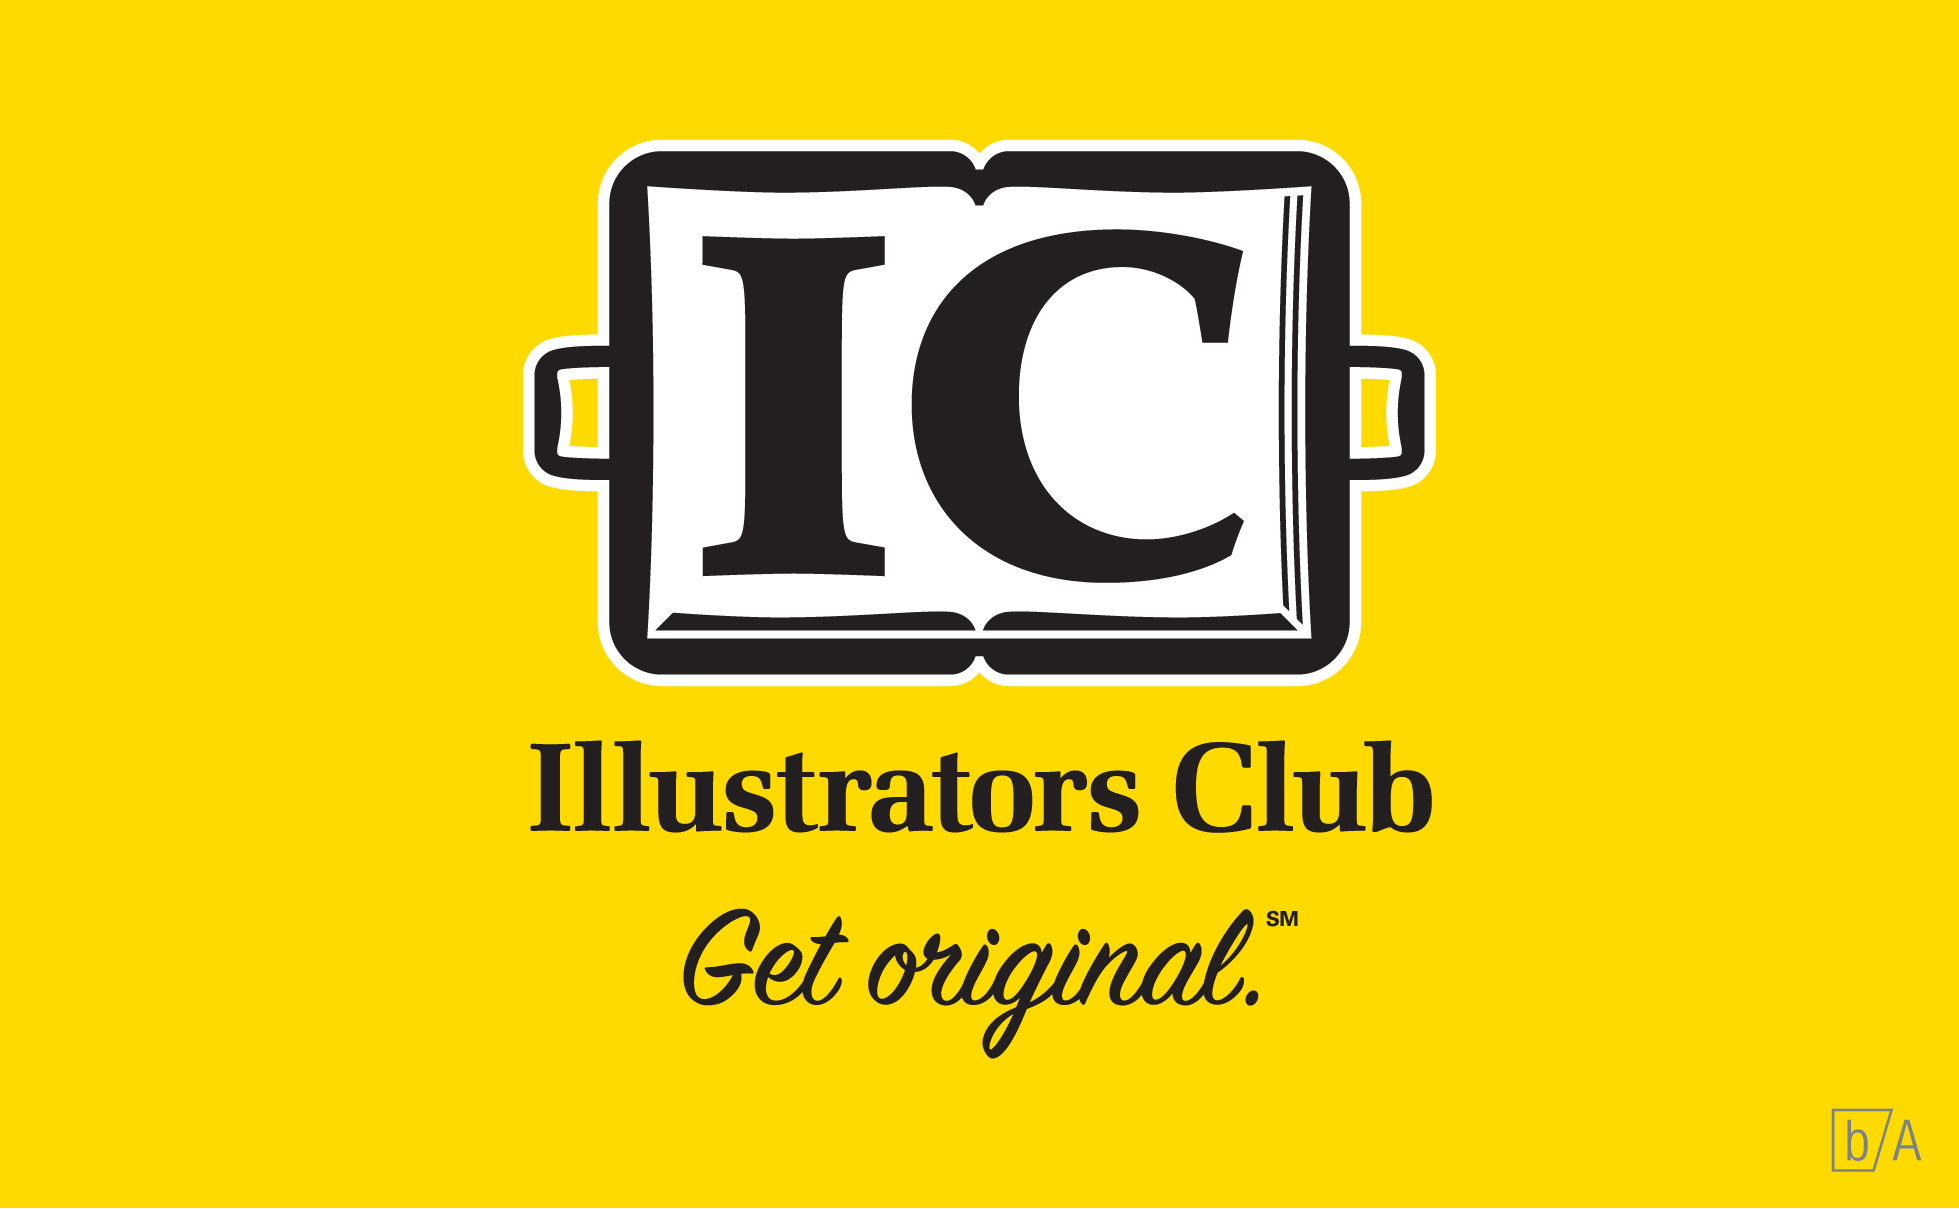 Illustrators Club